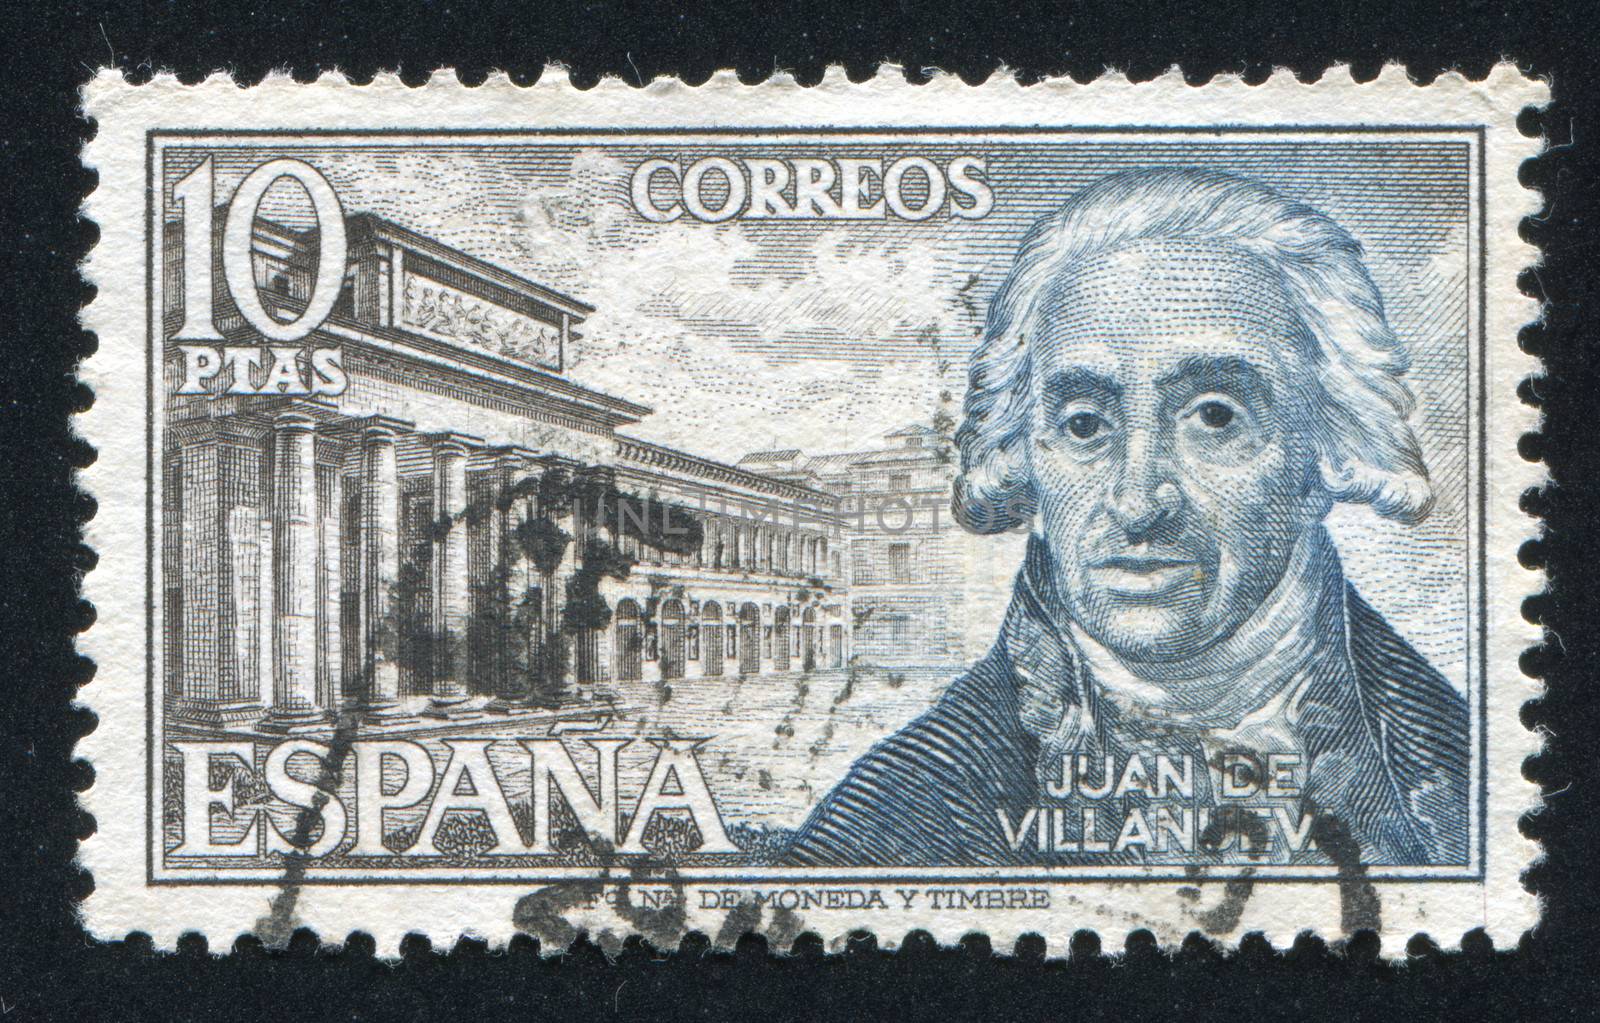 SPAIN - CIRCA 1973: stamp printed by Spain, shows Juan de Villanueva and Prado, circa 1973